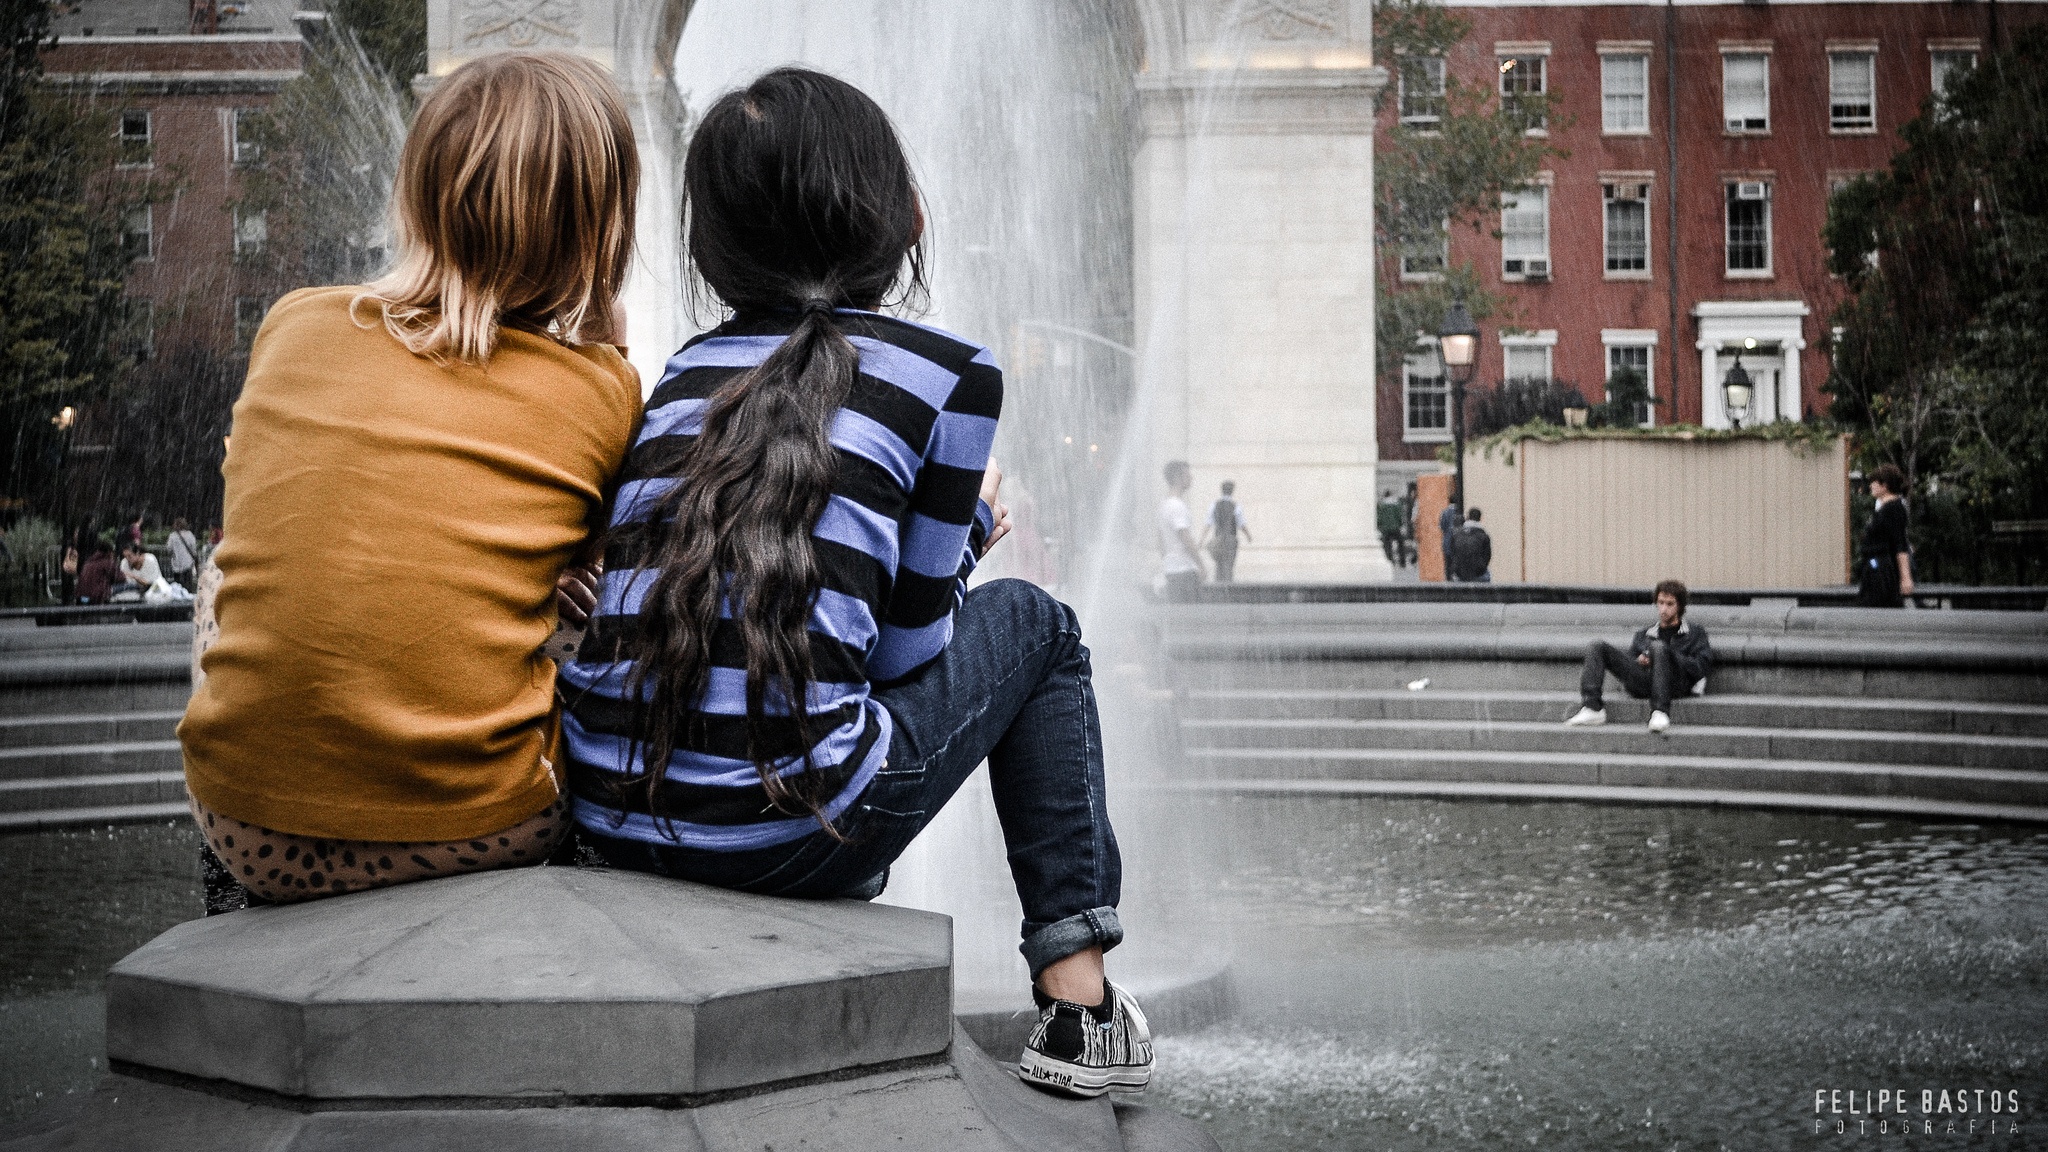 At Washington Square Fountain, New York.